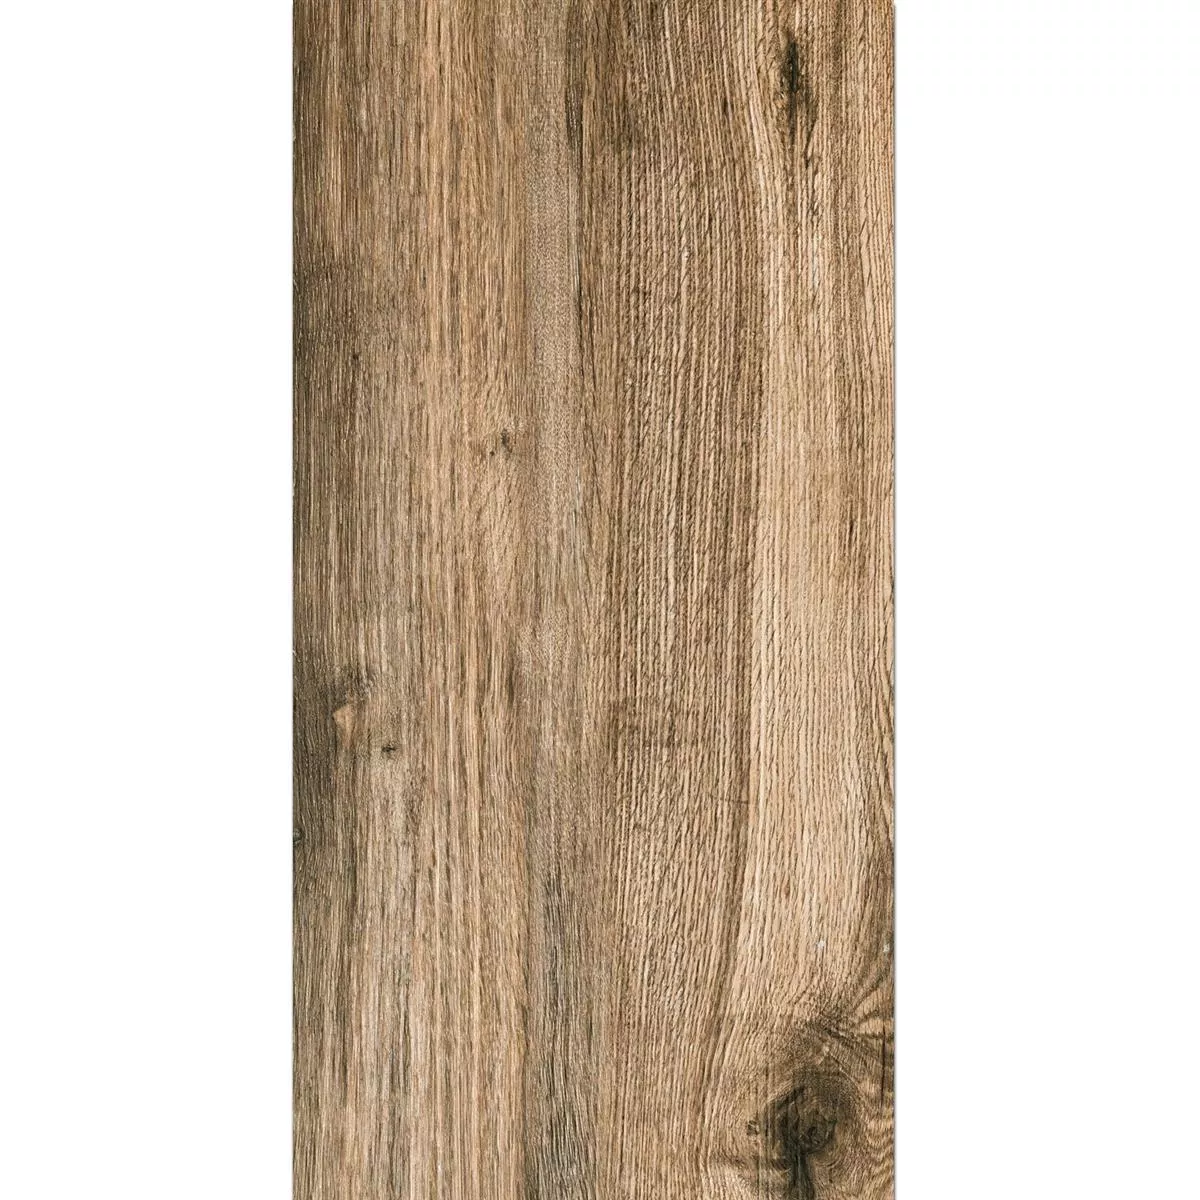 Prov Terass Klinker Starwood Träimitation Oak 45x90cm